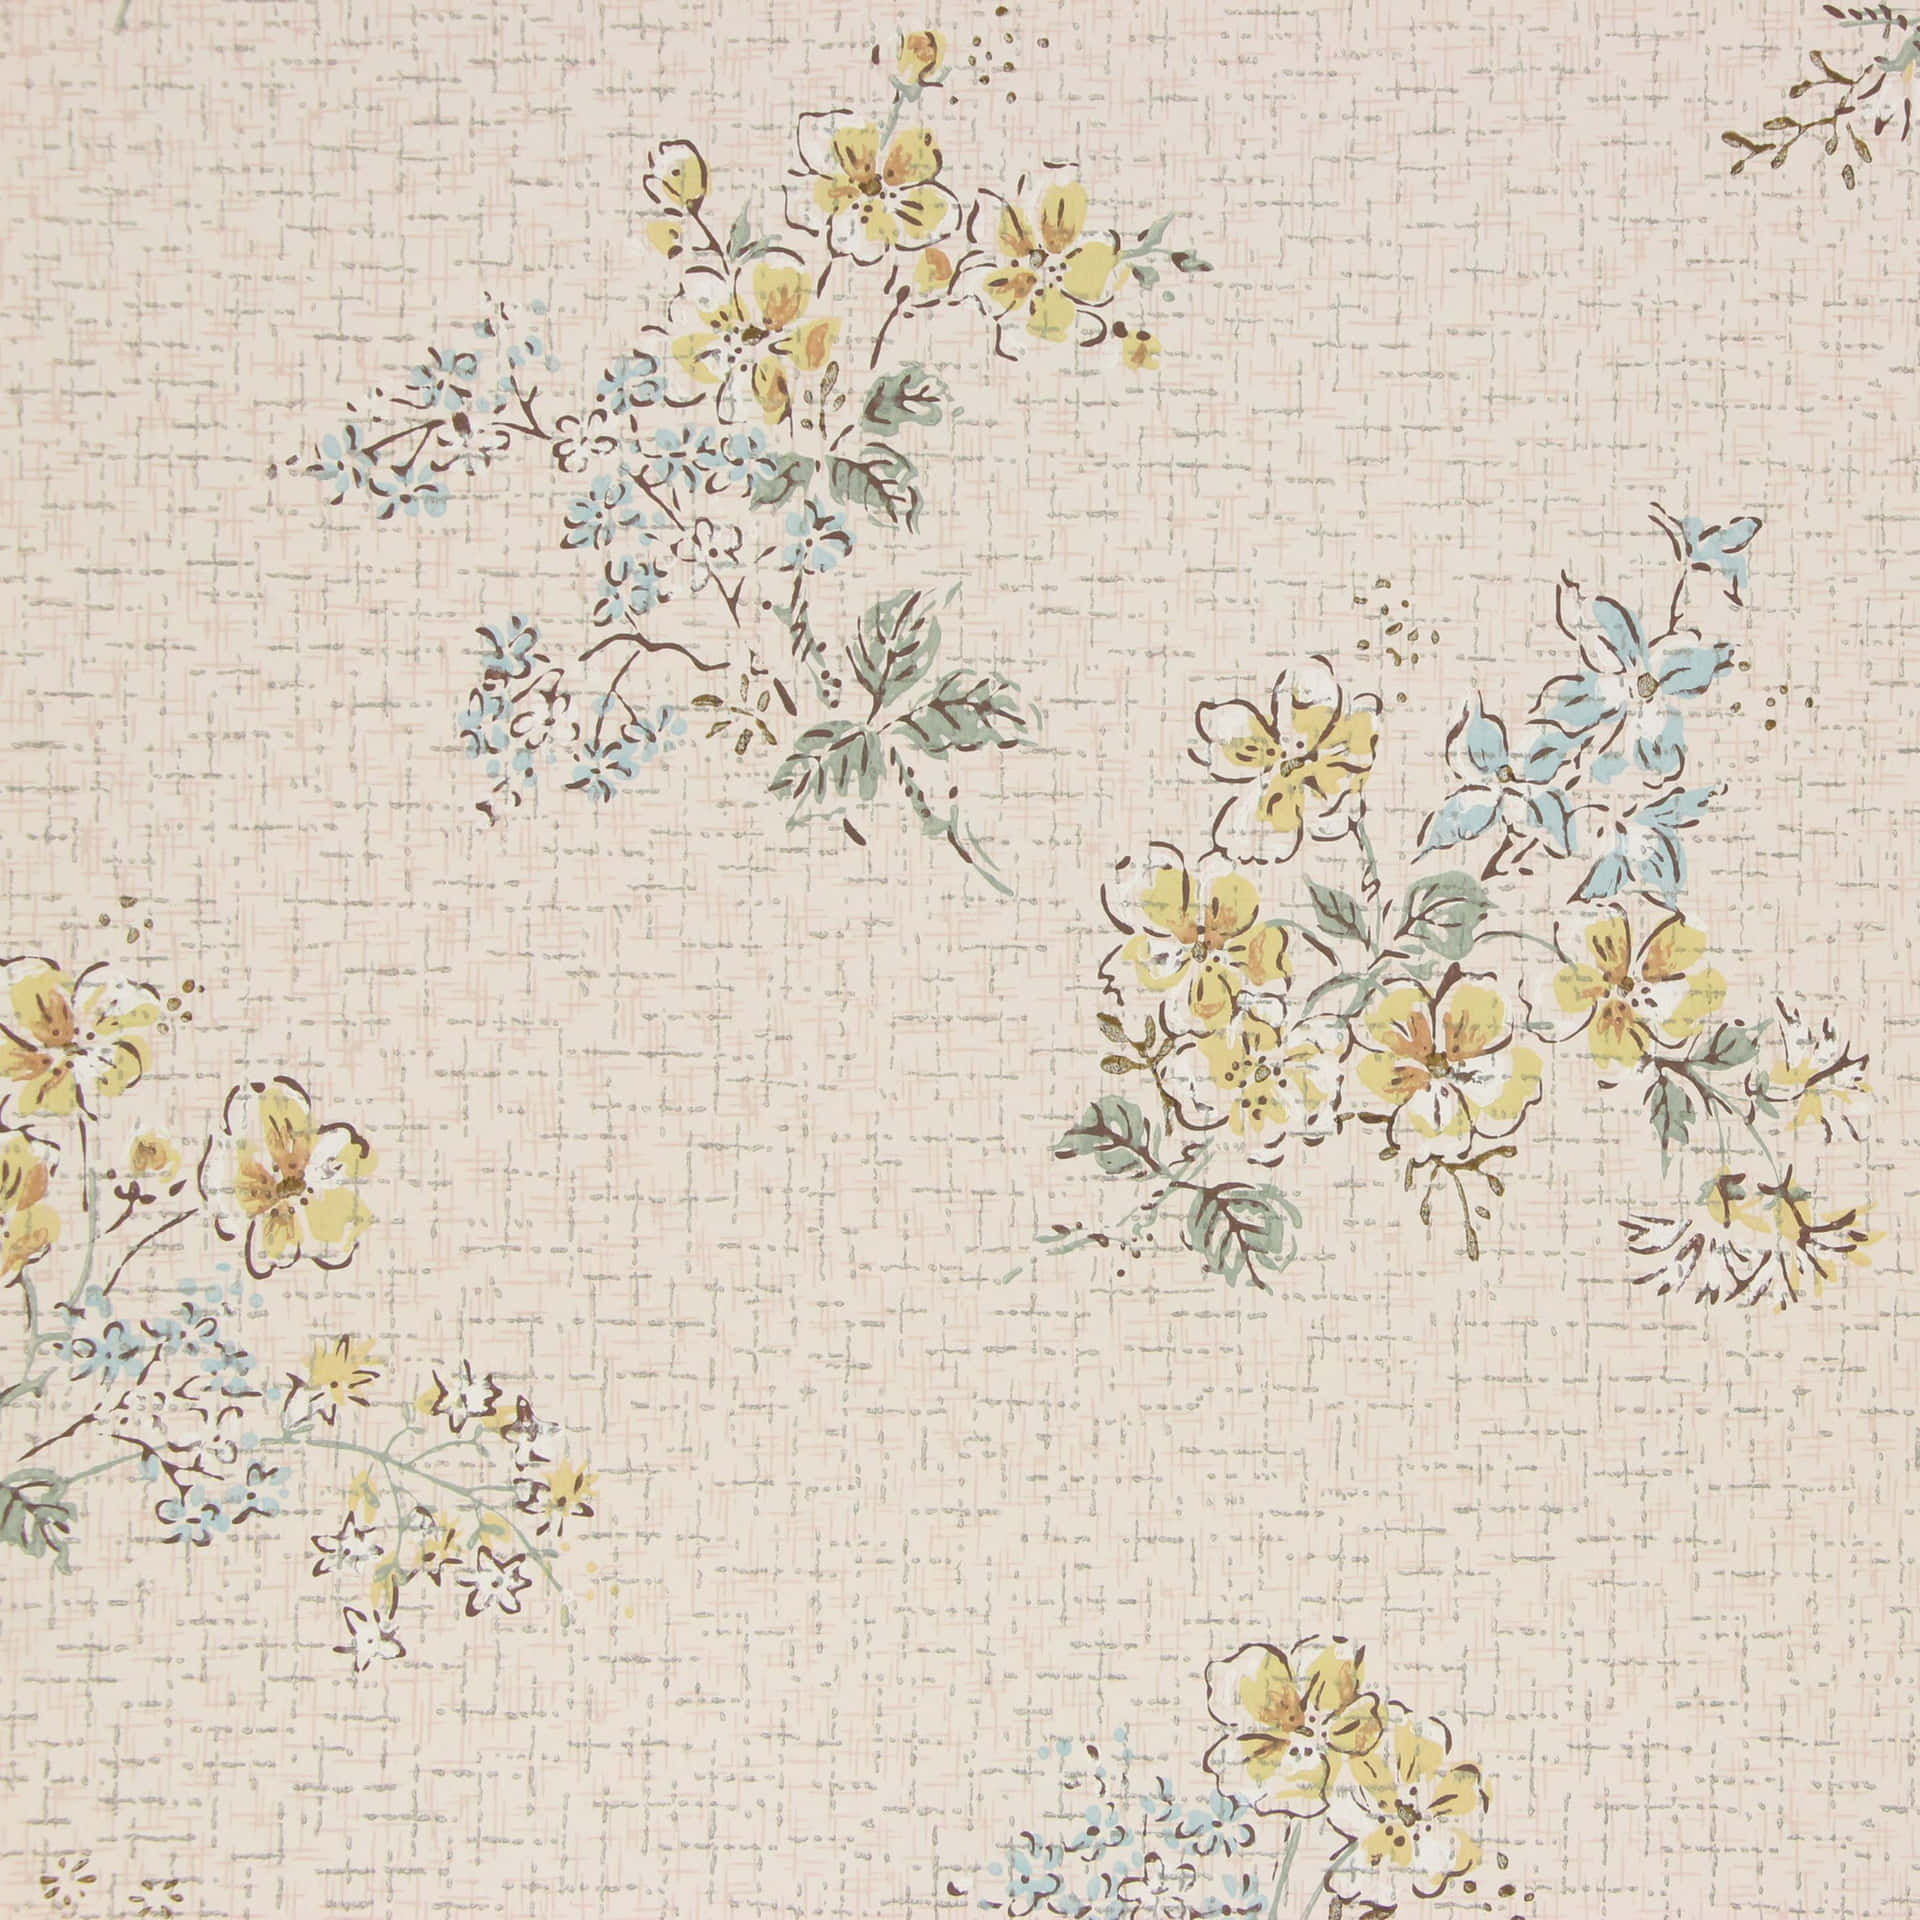 A Delicate Vintage Flower Wallpaper